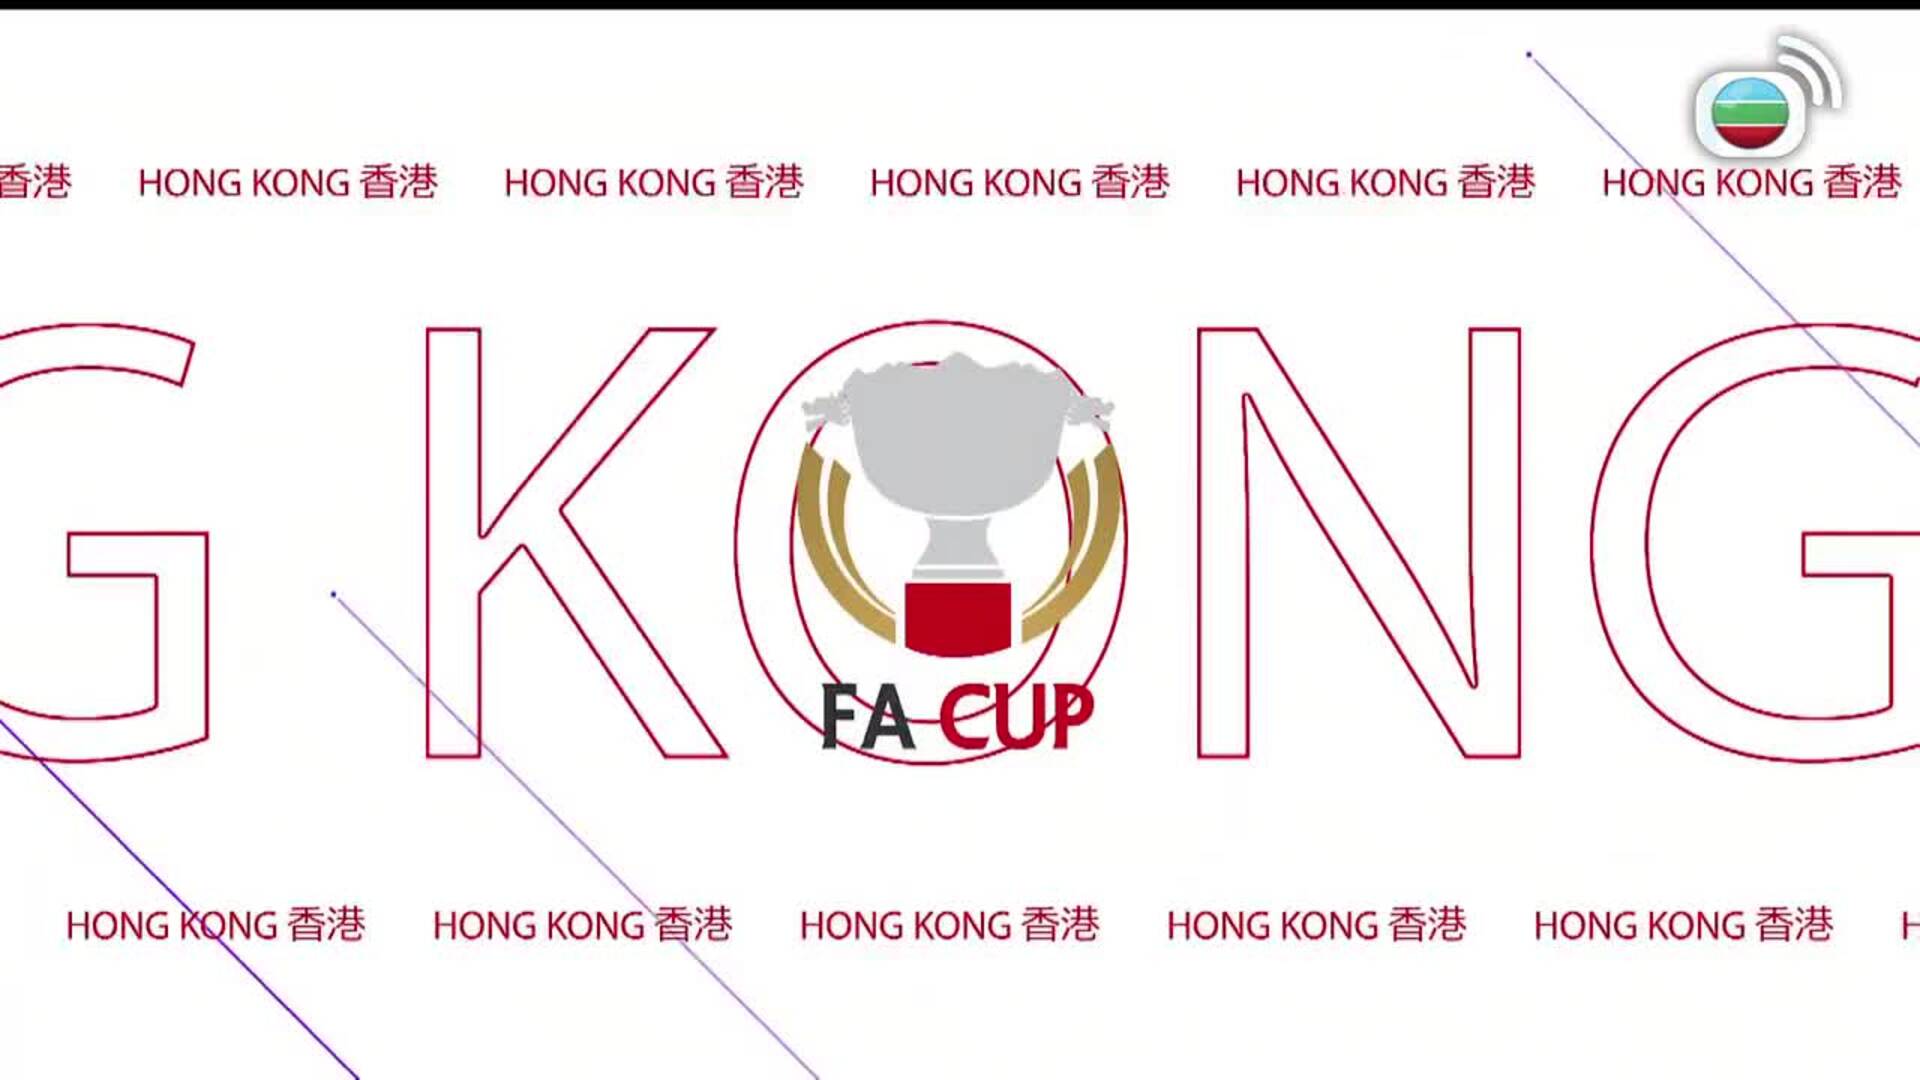 香港足總盃2022-2023-HKFA Cup 2022-2023